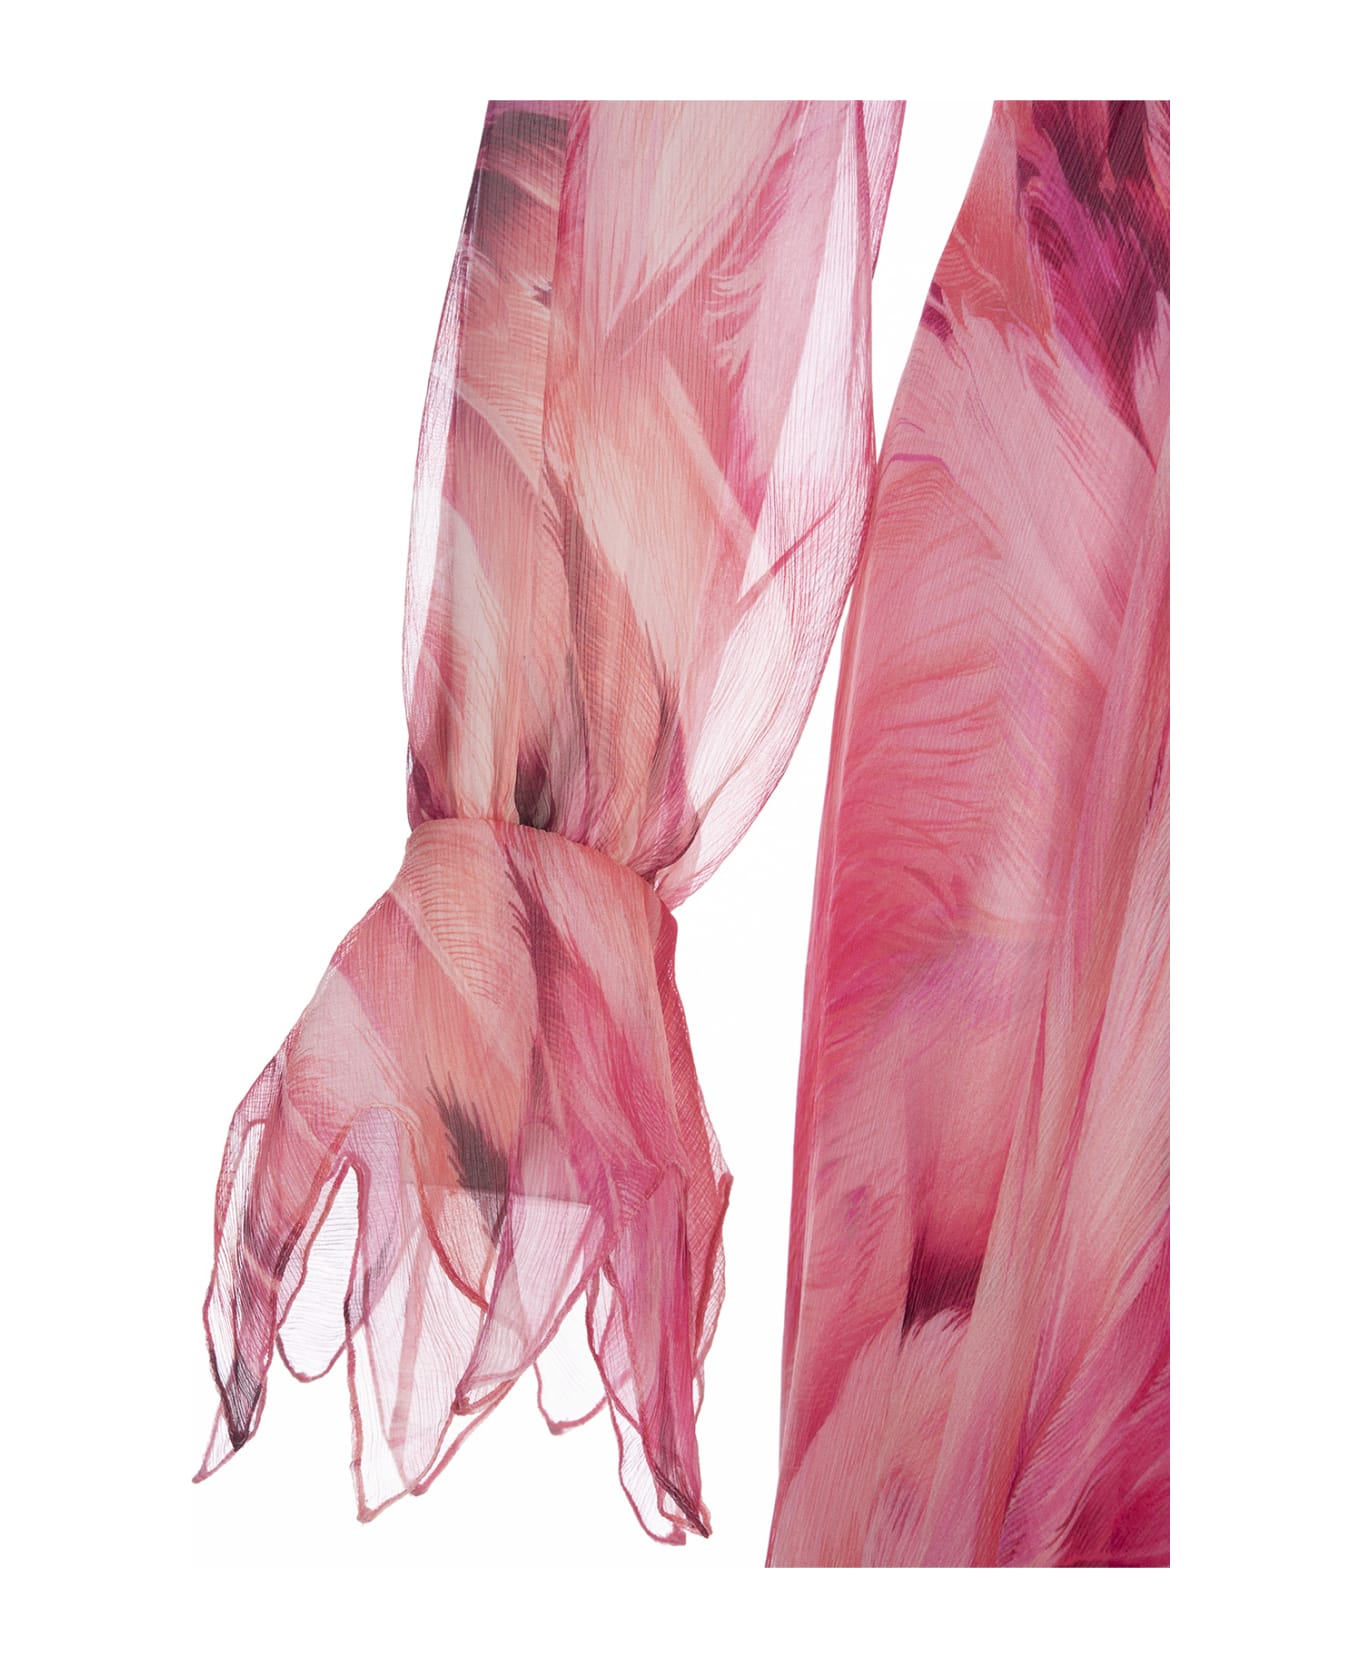 Roberto Cavalli Long Dress With Pink Plumage Print - Pink